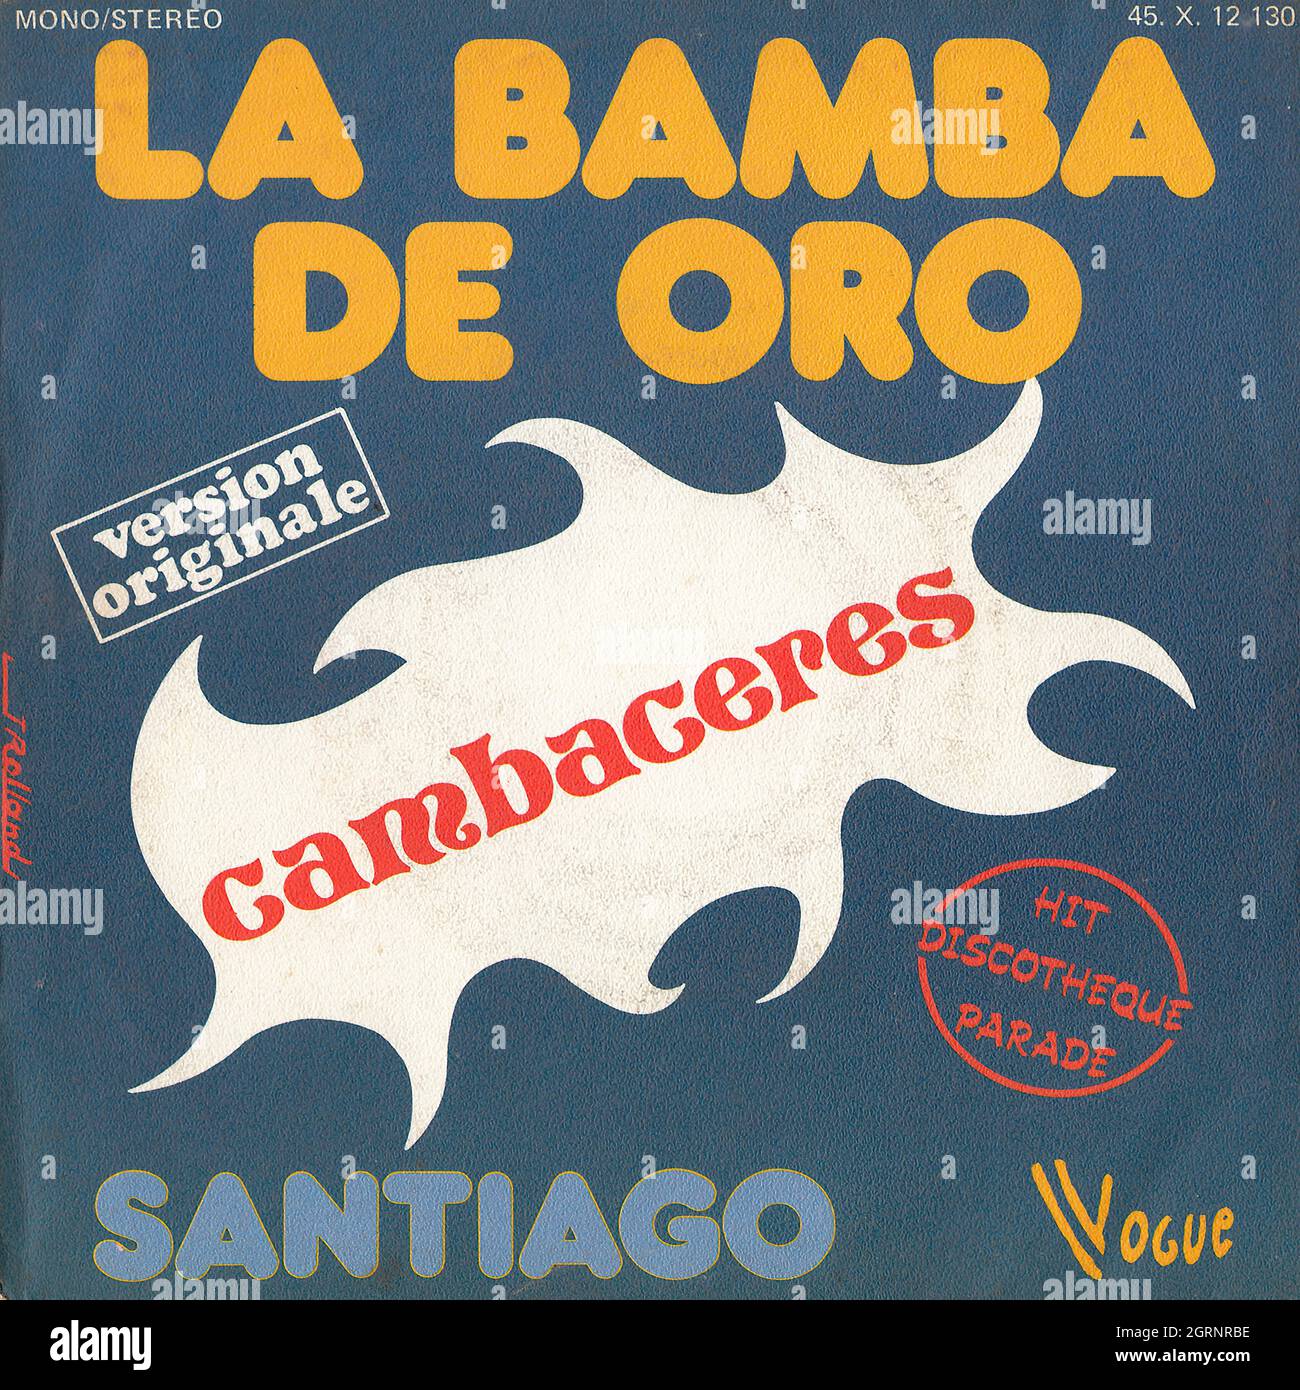 Cambaceres - La Bamba de Oro - Santiago 45rpm - Vintage Vinyl Record Cover  Stock Photo - Alamy